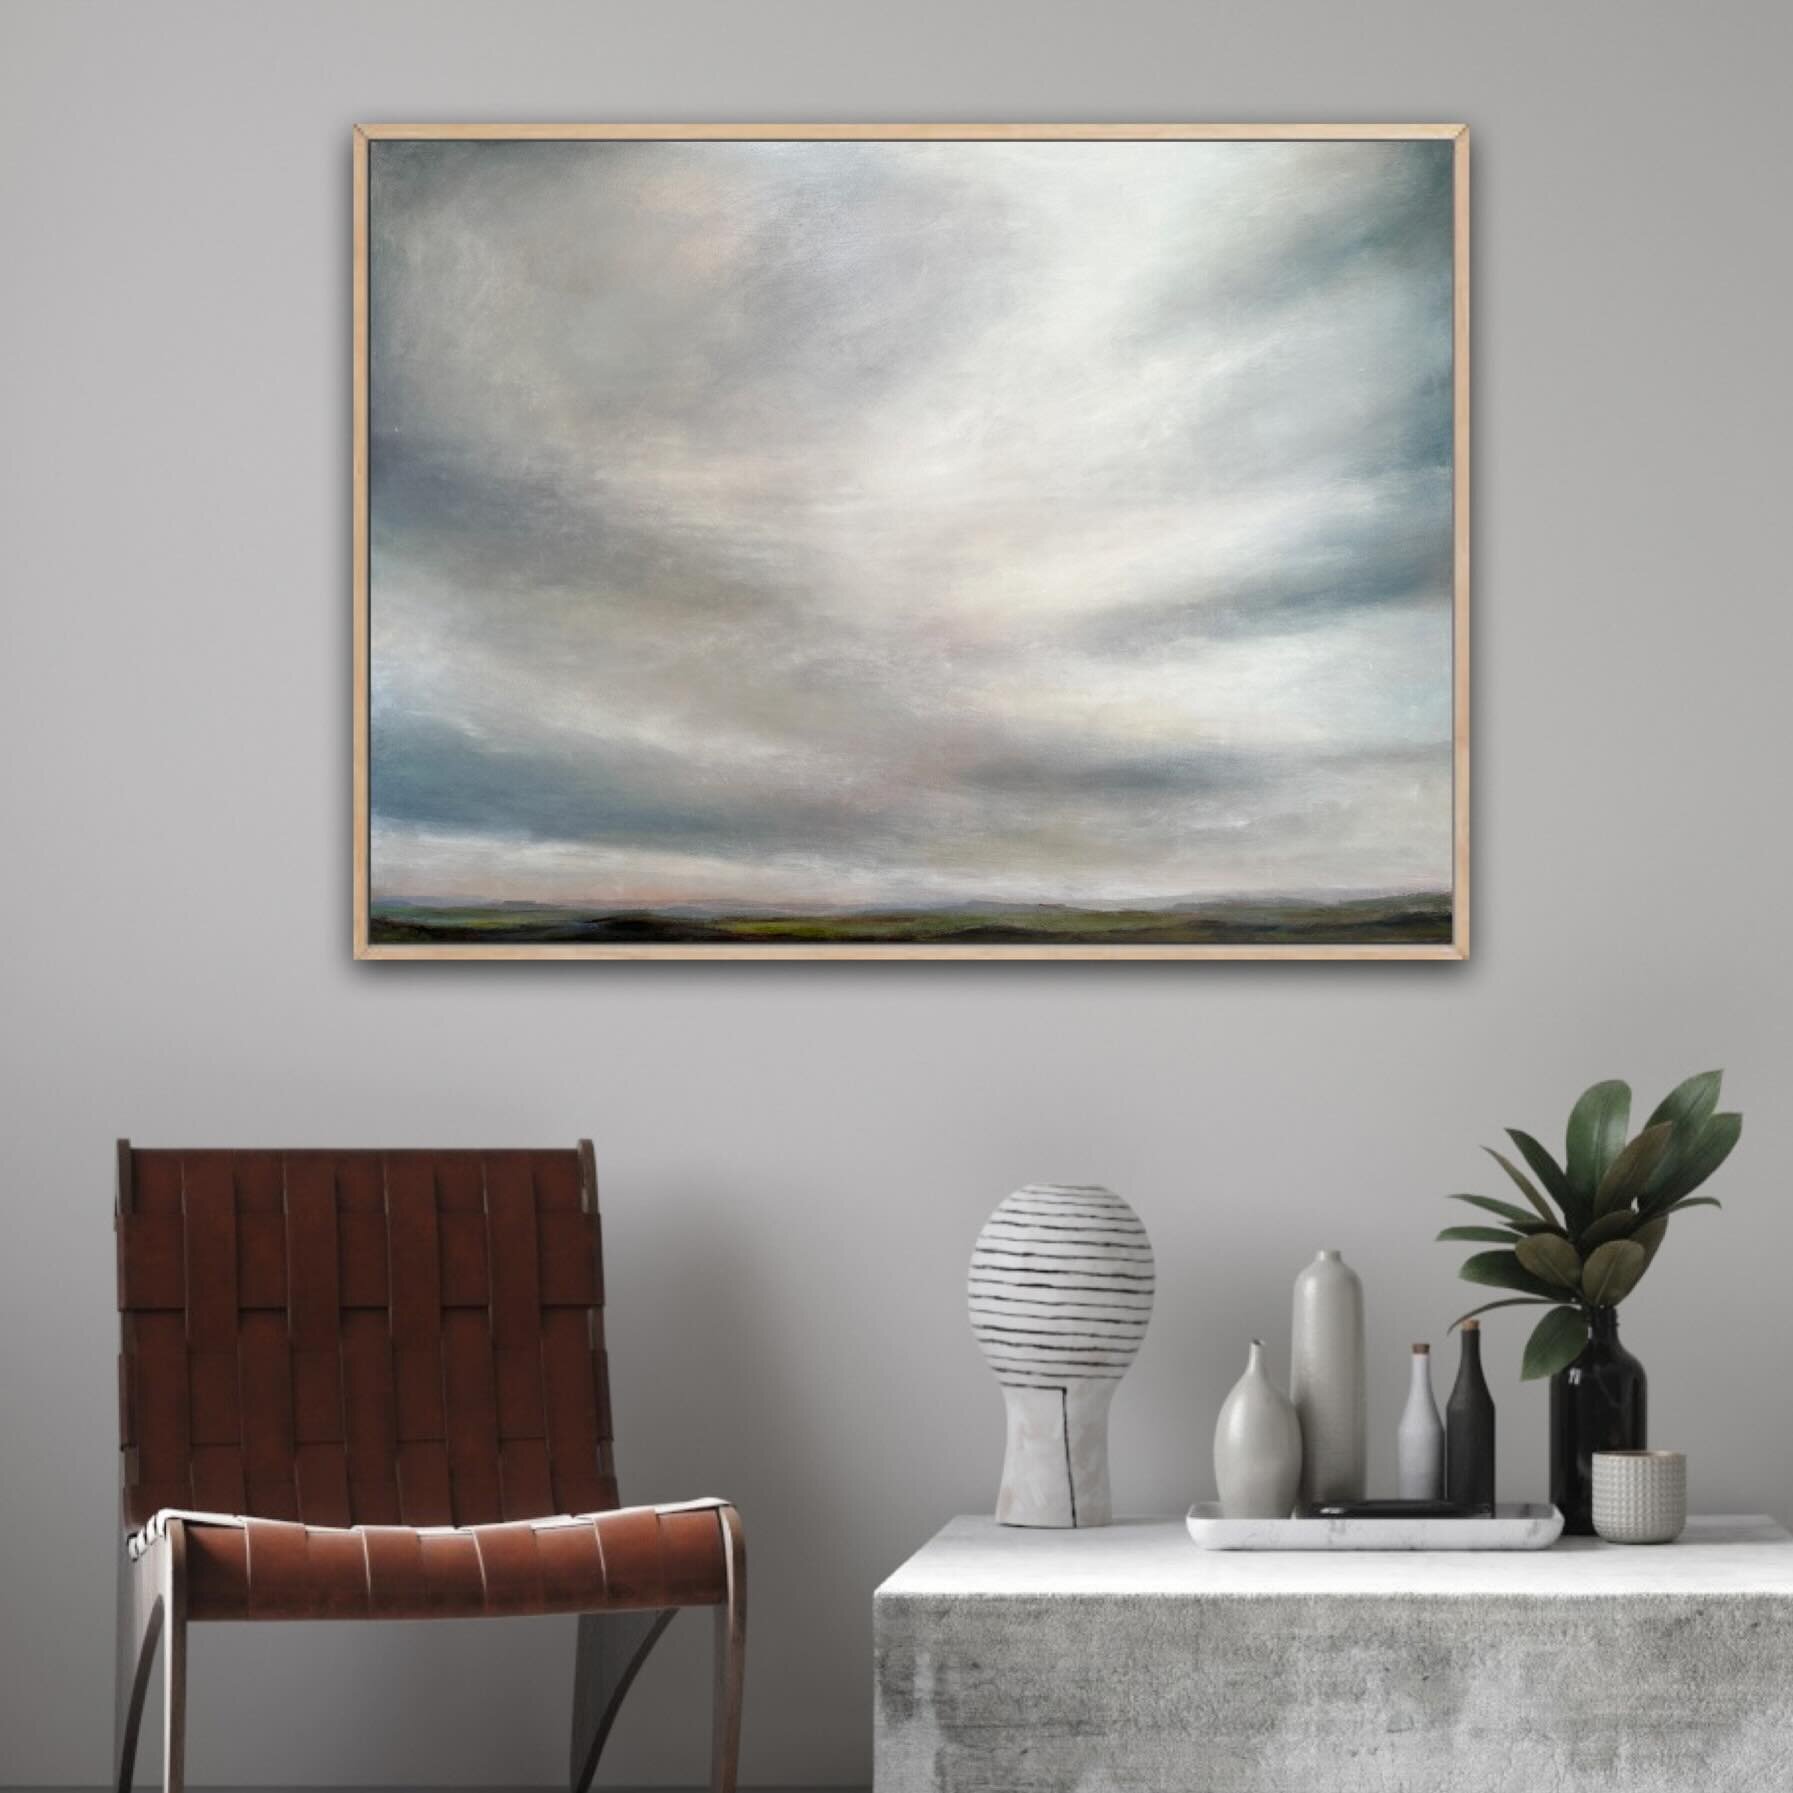 March Light, 40x30, oil on panel 

#cloudscape #skyscape #horizon #winter #calmyourmind #interiordecor #artforinteriors #interiordesign #artforthehome #interiorstyling #asheville #ashevilleartist #avlartist #avlart #dawnrentz